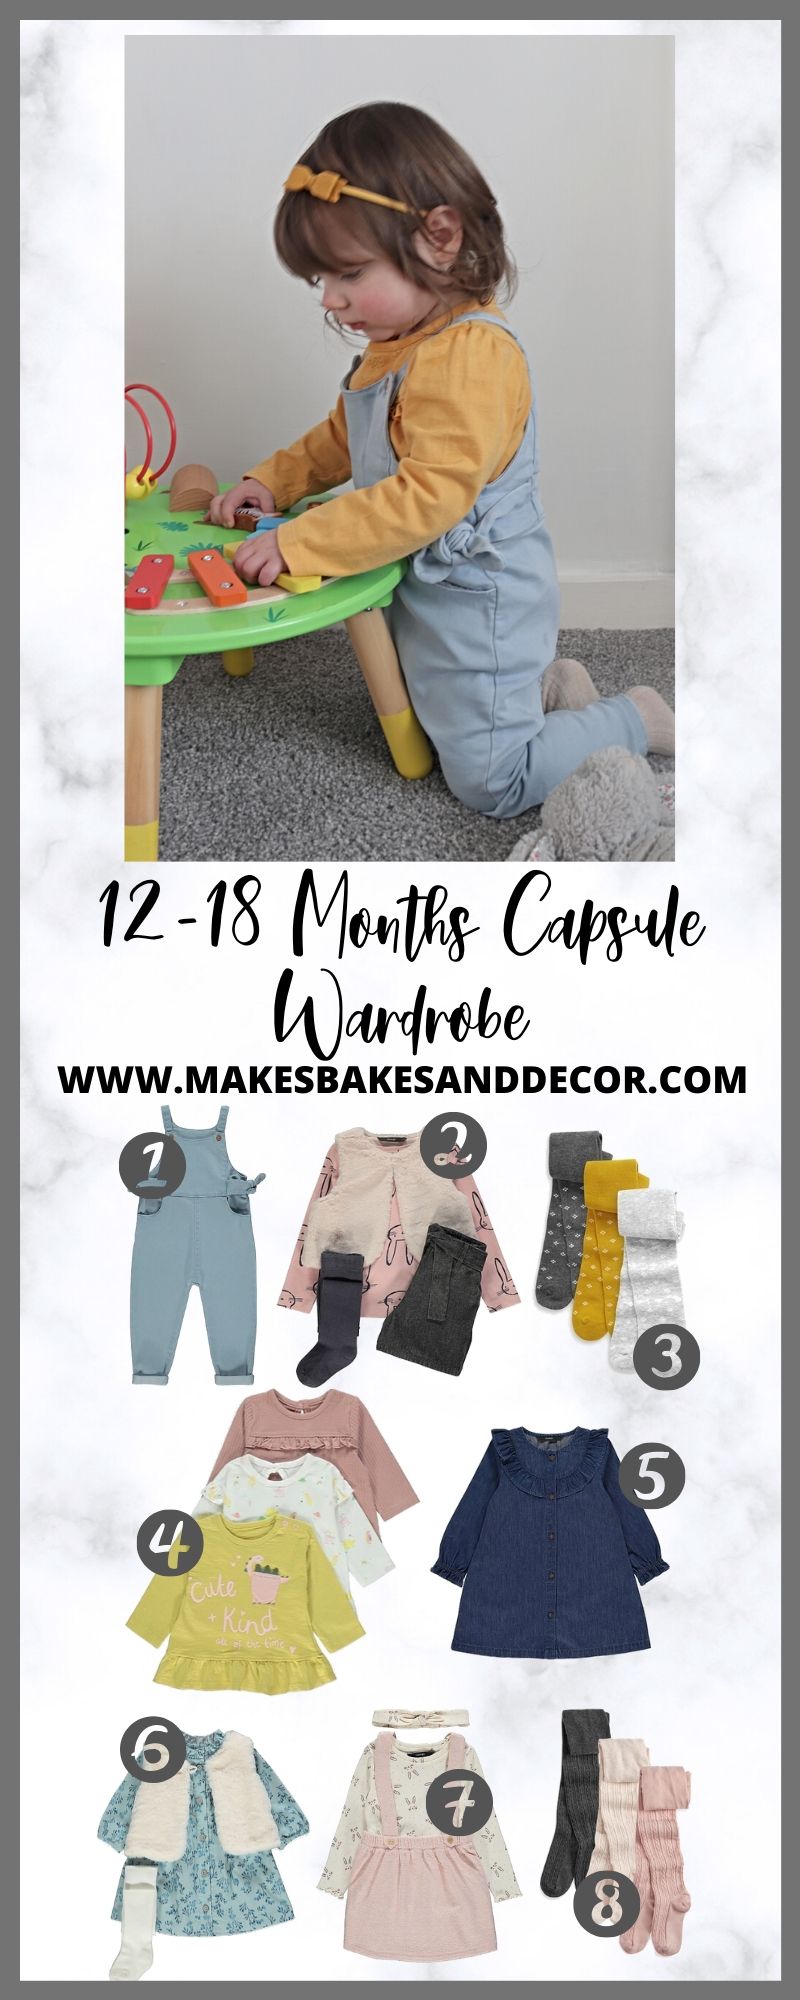 12-18 month capsule wardrobe